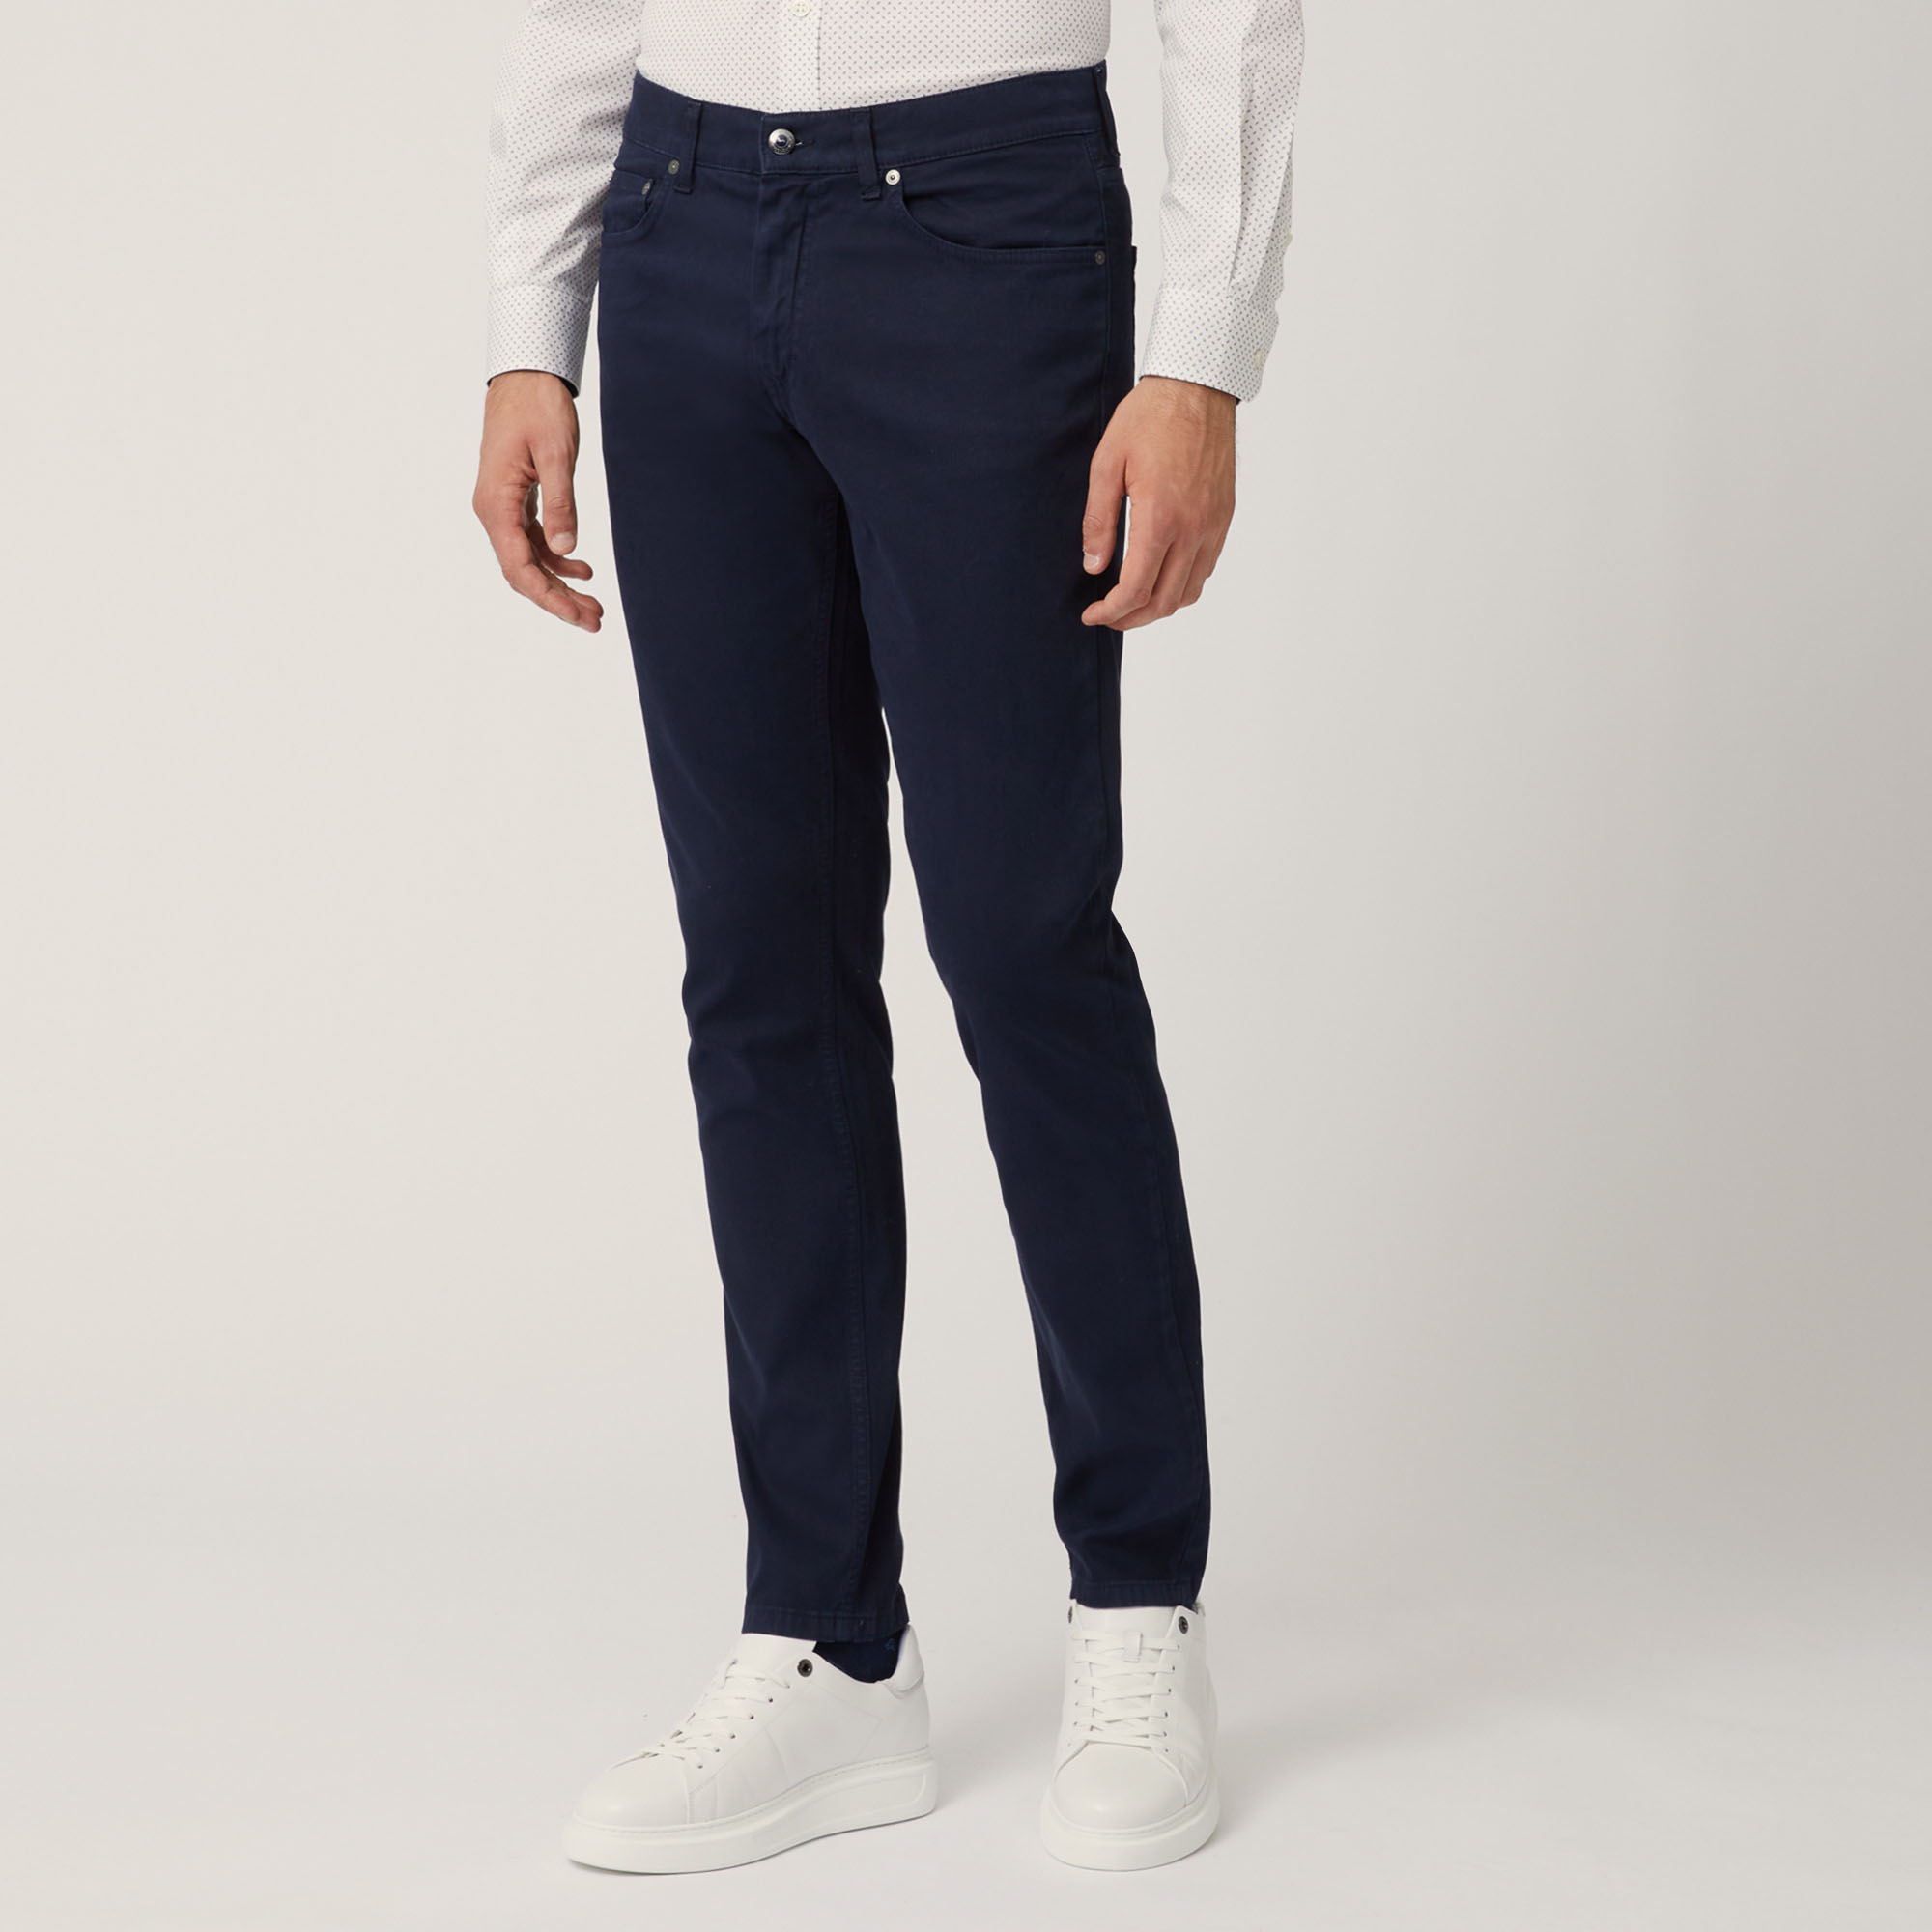 Pantalone Cinque Tasche Narrow Fit, Blu Navy, large